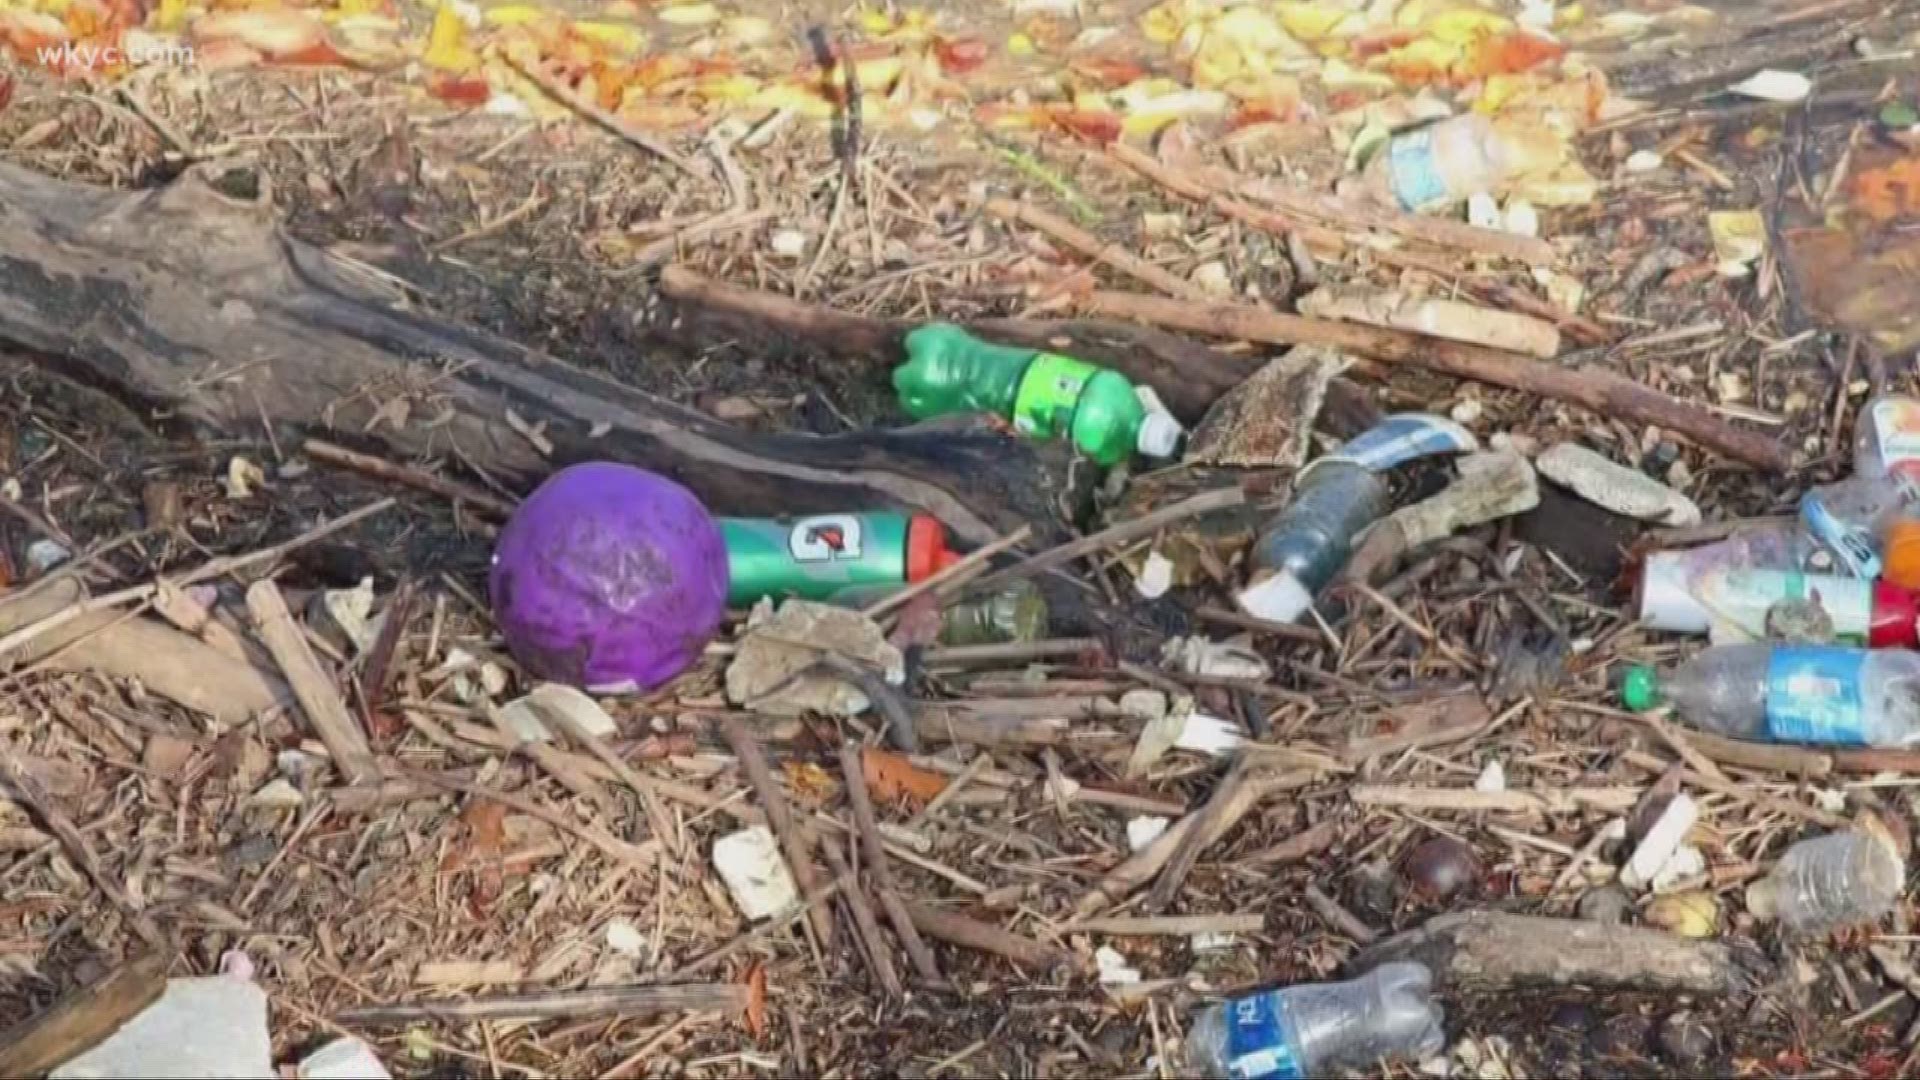 Cleveland ranks above average for plastic trash in the lake. Dorsena Drakeford reports.